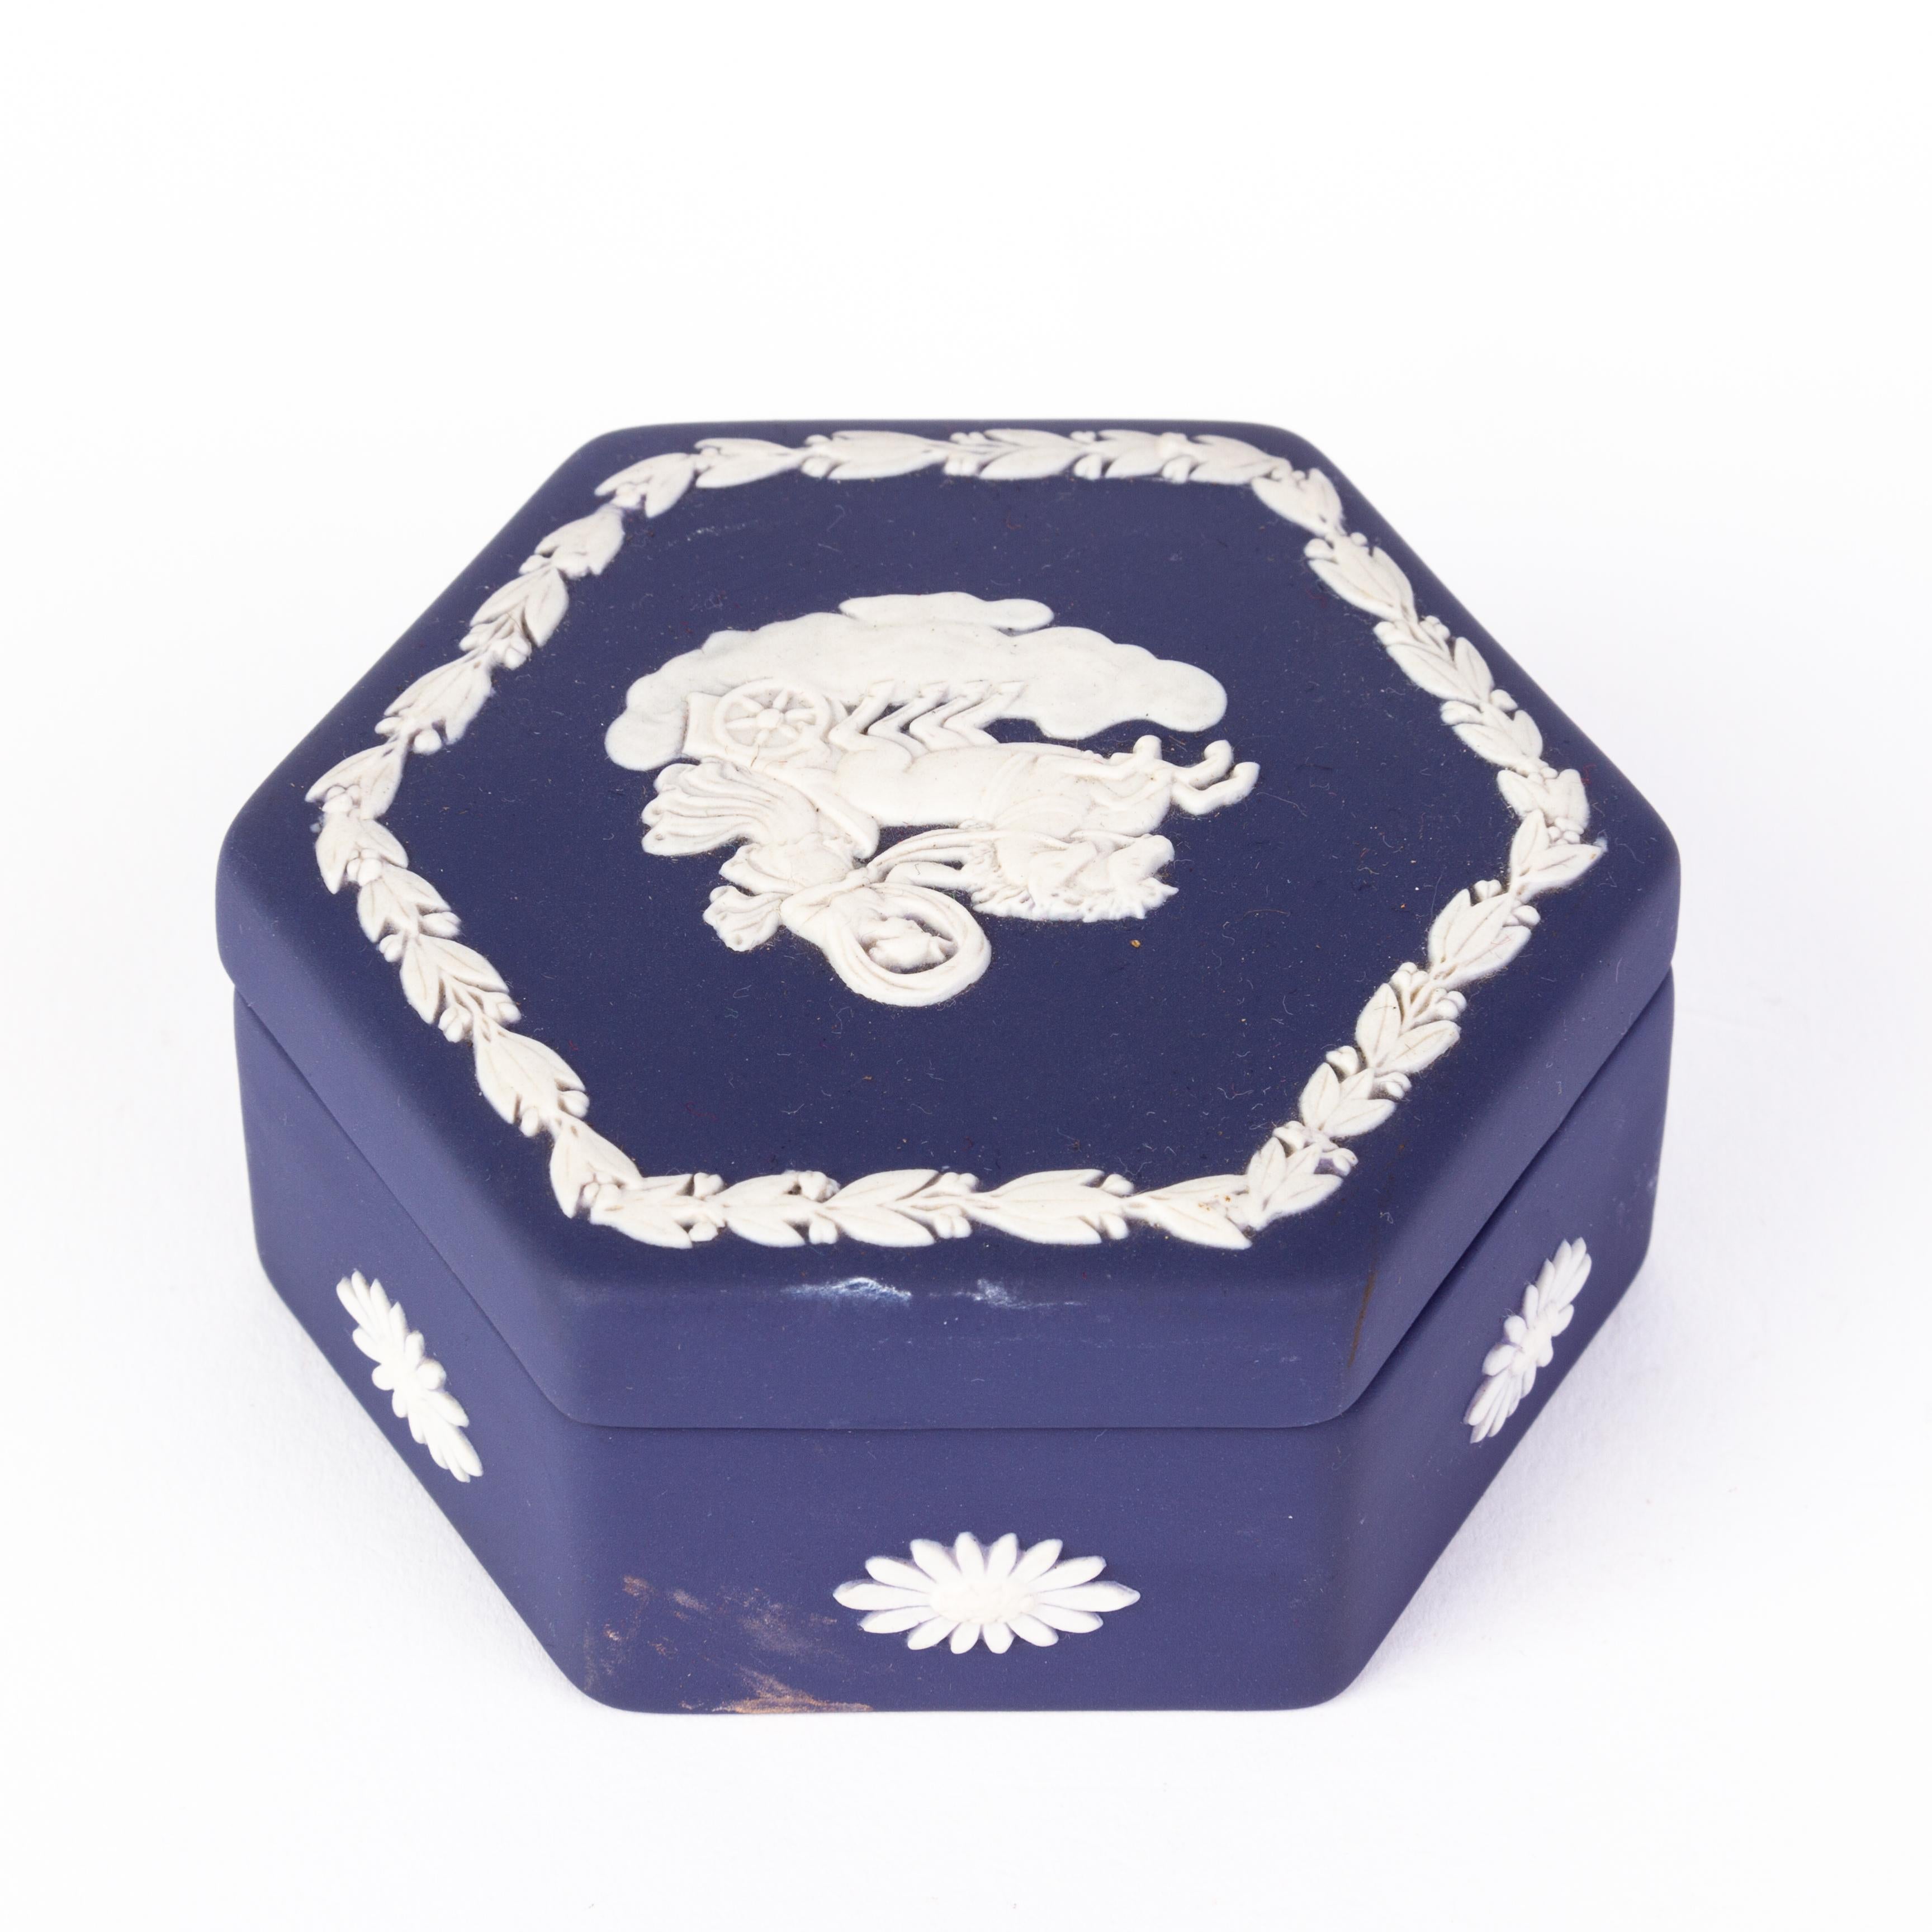 Wedgwood Portland Blue Jasperware Neoclassical Lidded Trinket Box 
Good condition
Free international shipping.